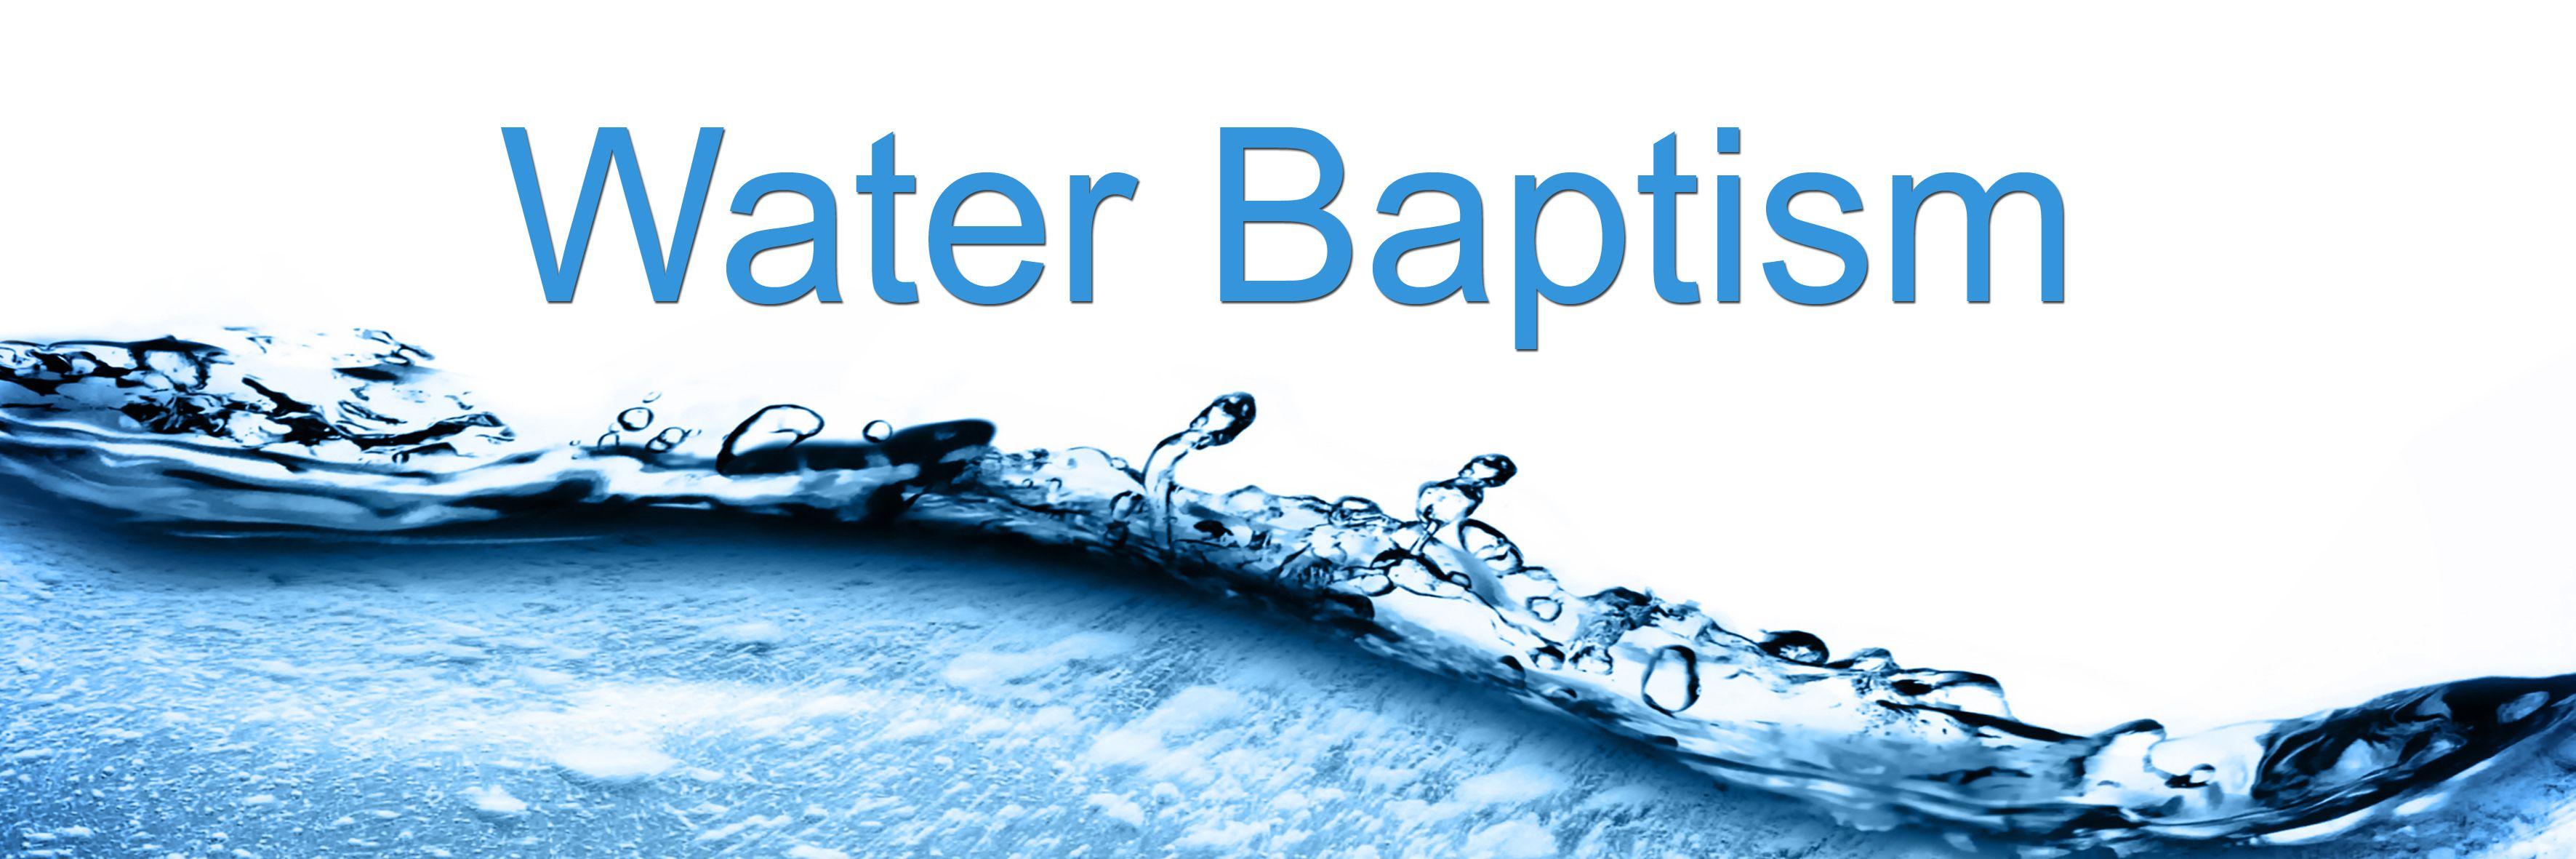 Water Baptism. 3543x1181 #water baptism